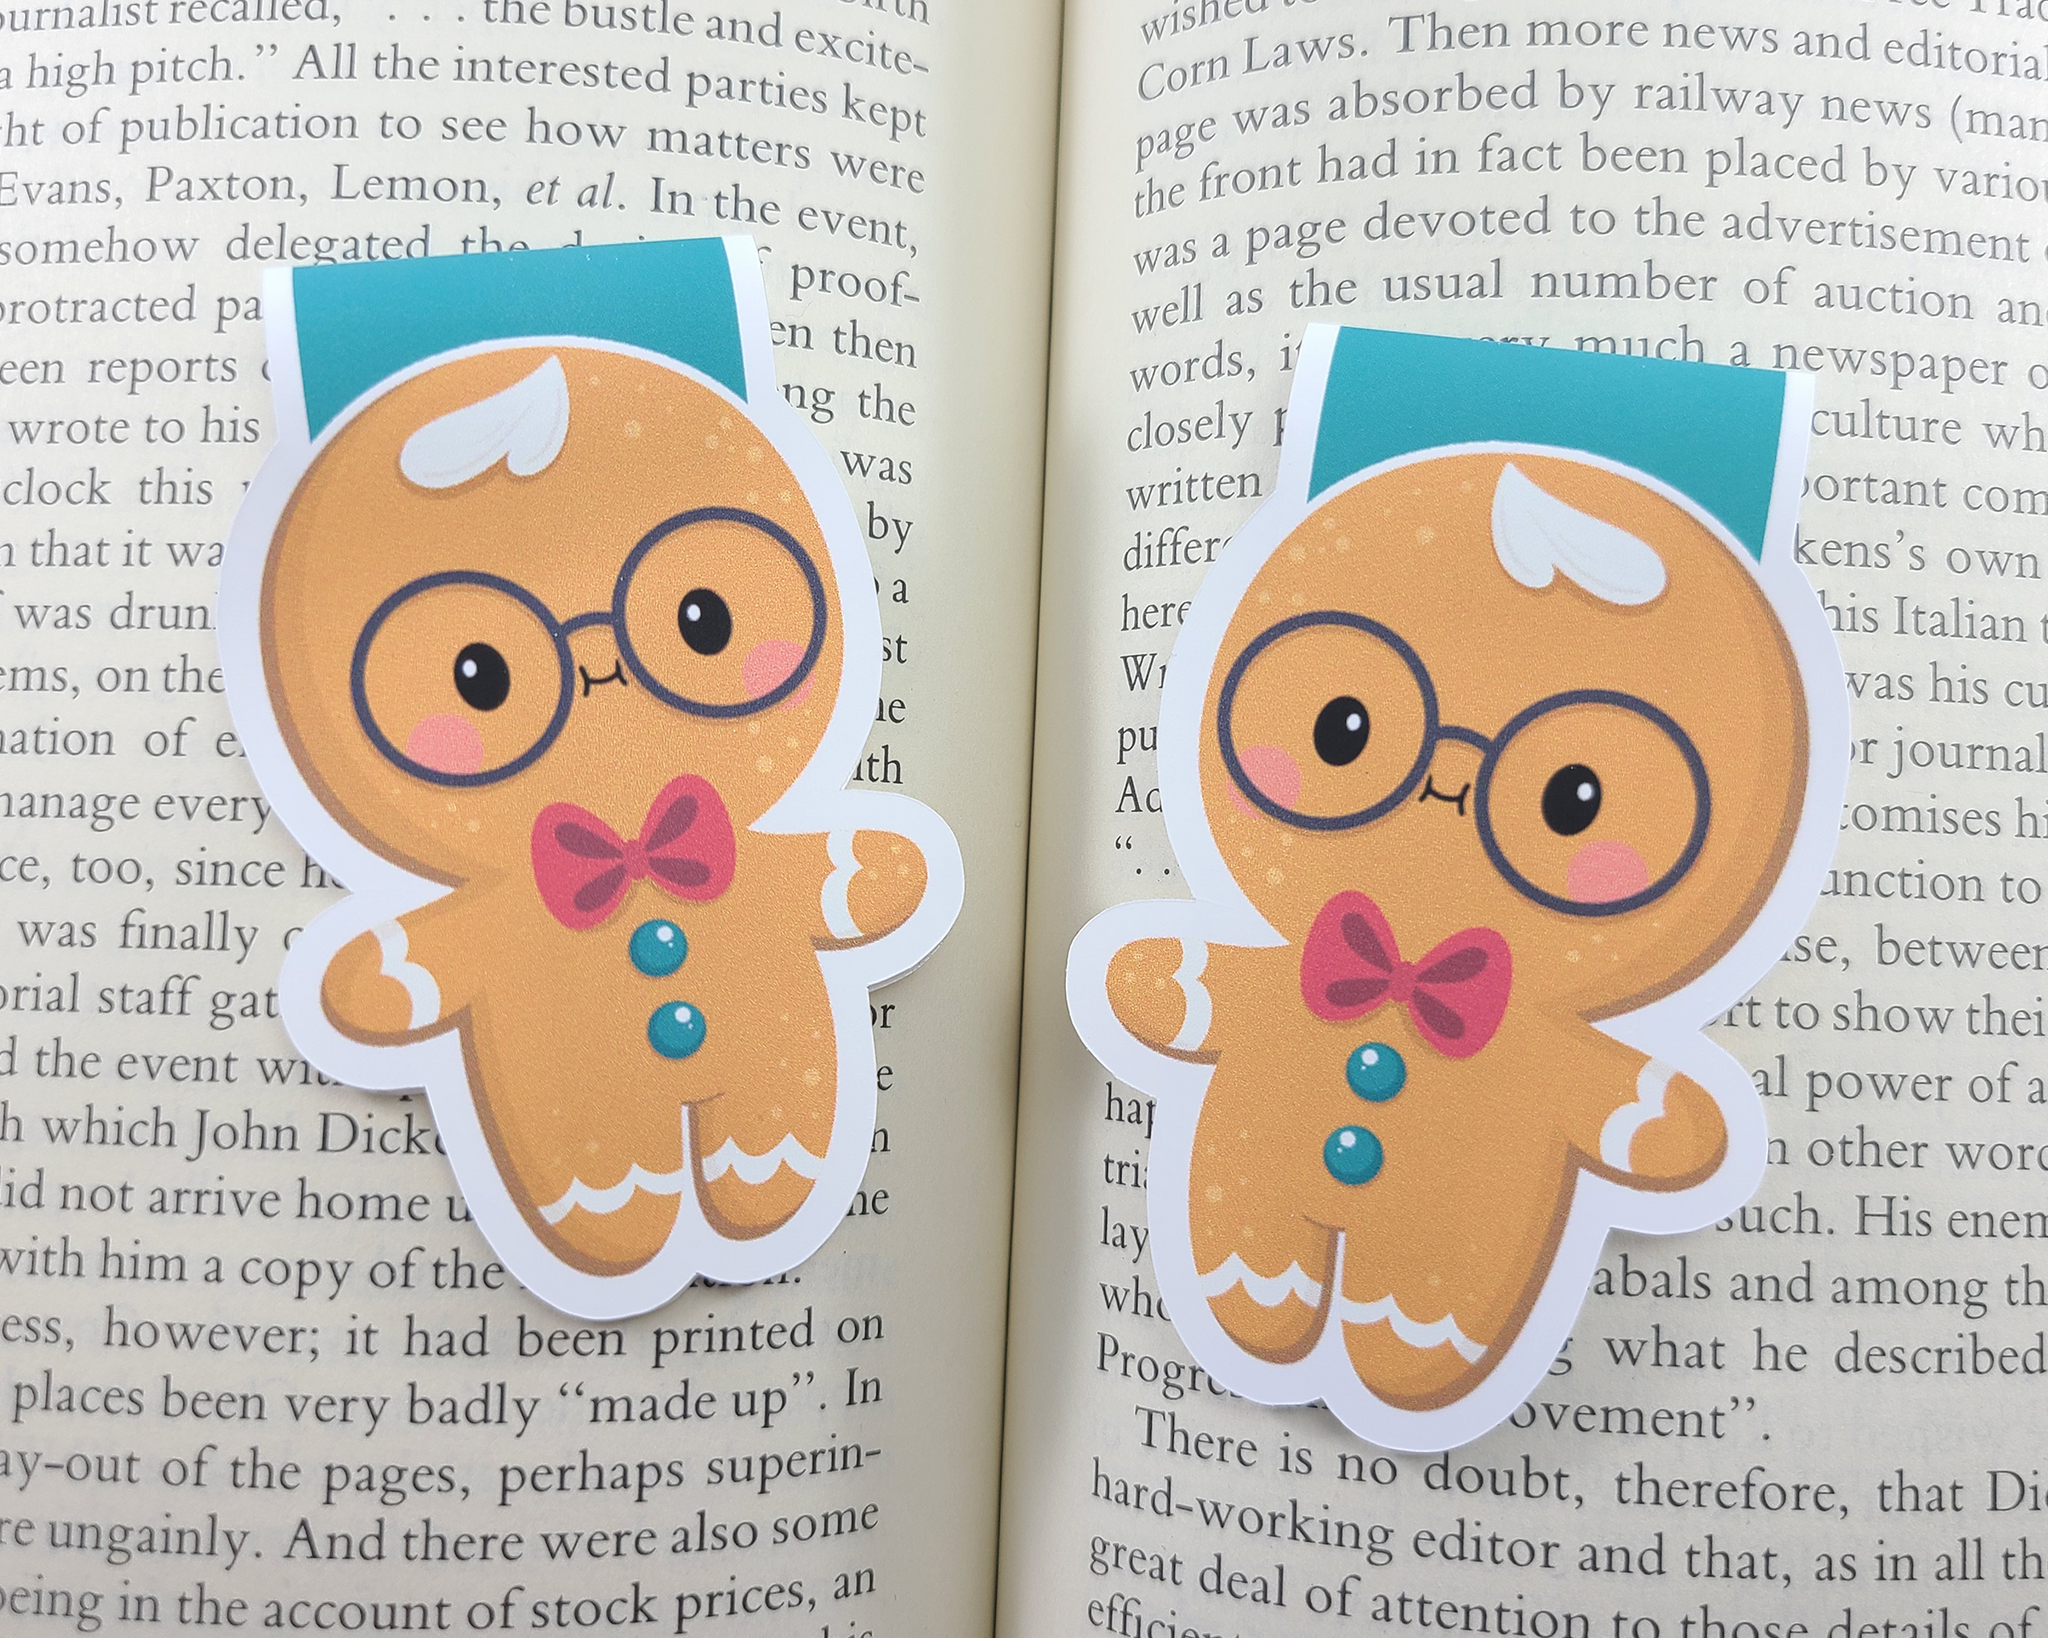 Gingerbread Boy Magnetic Bookmark